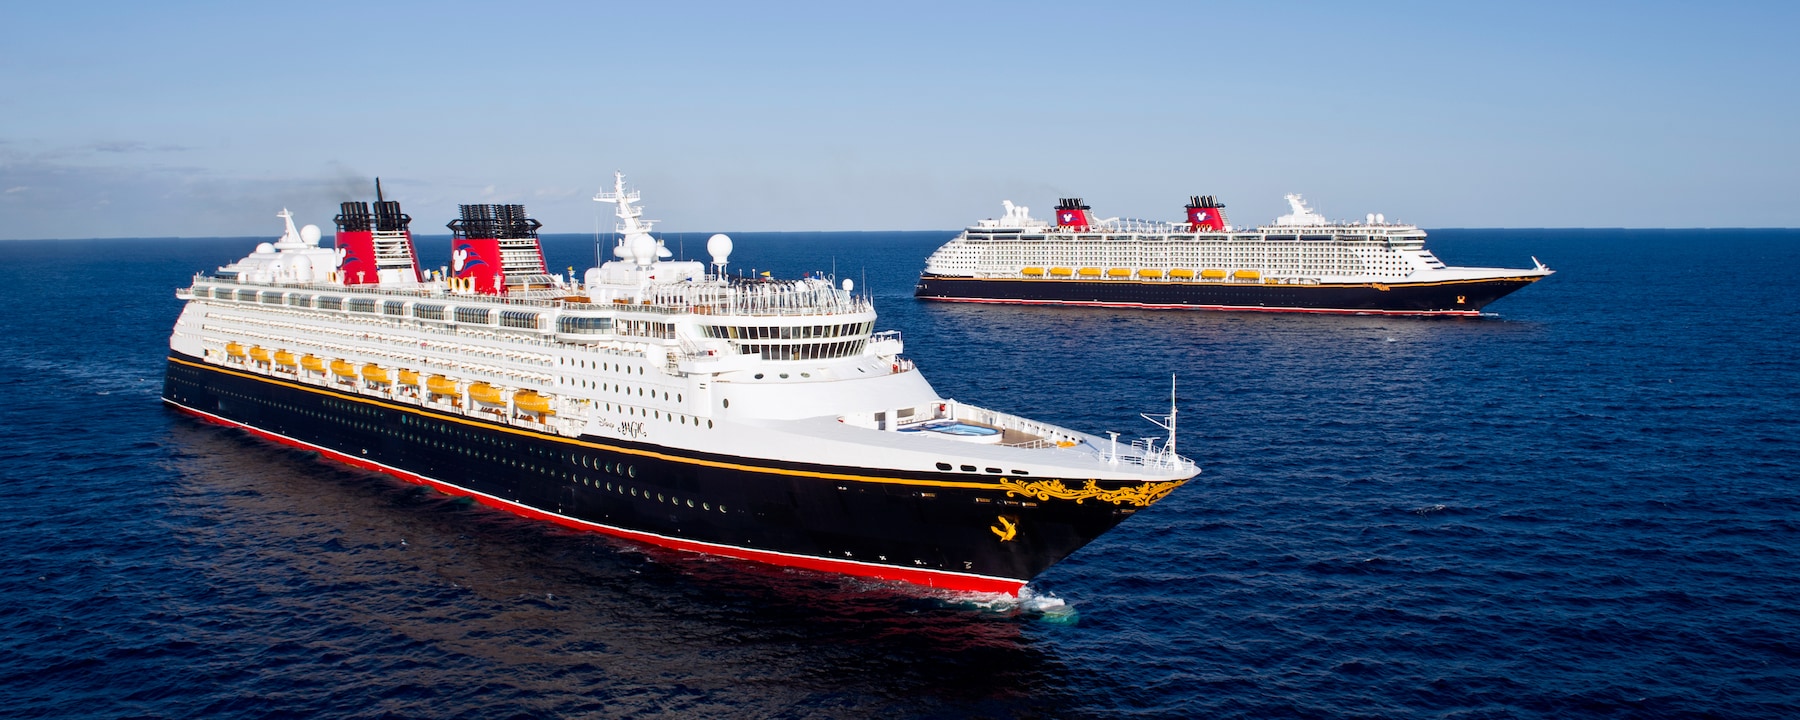 disney cruise ships cost